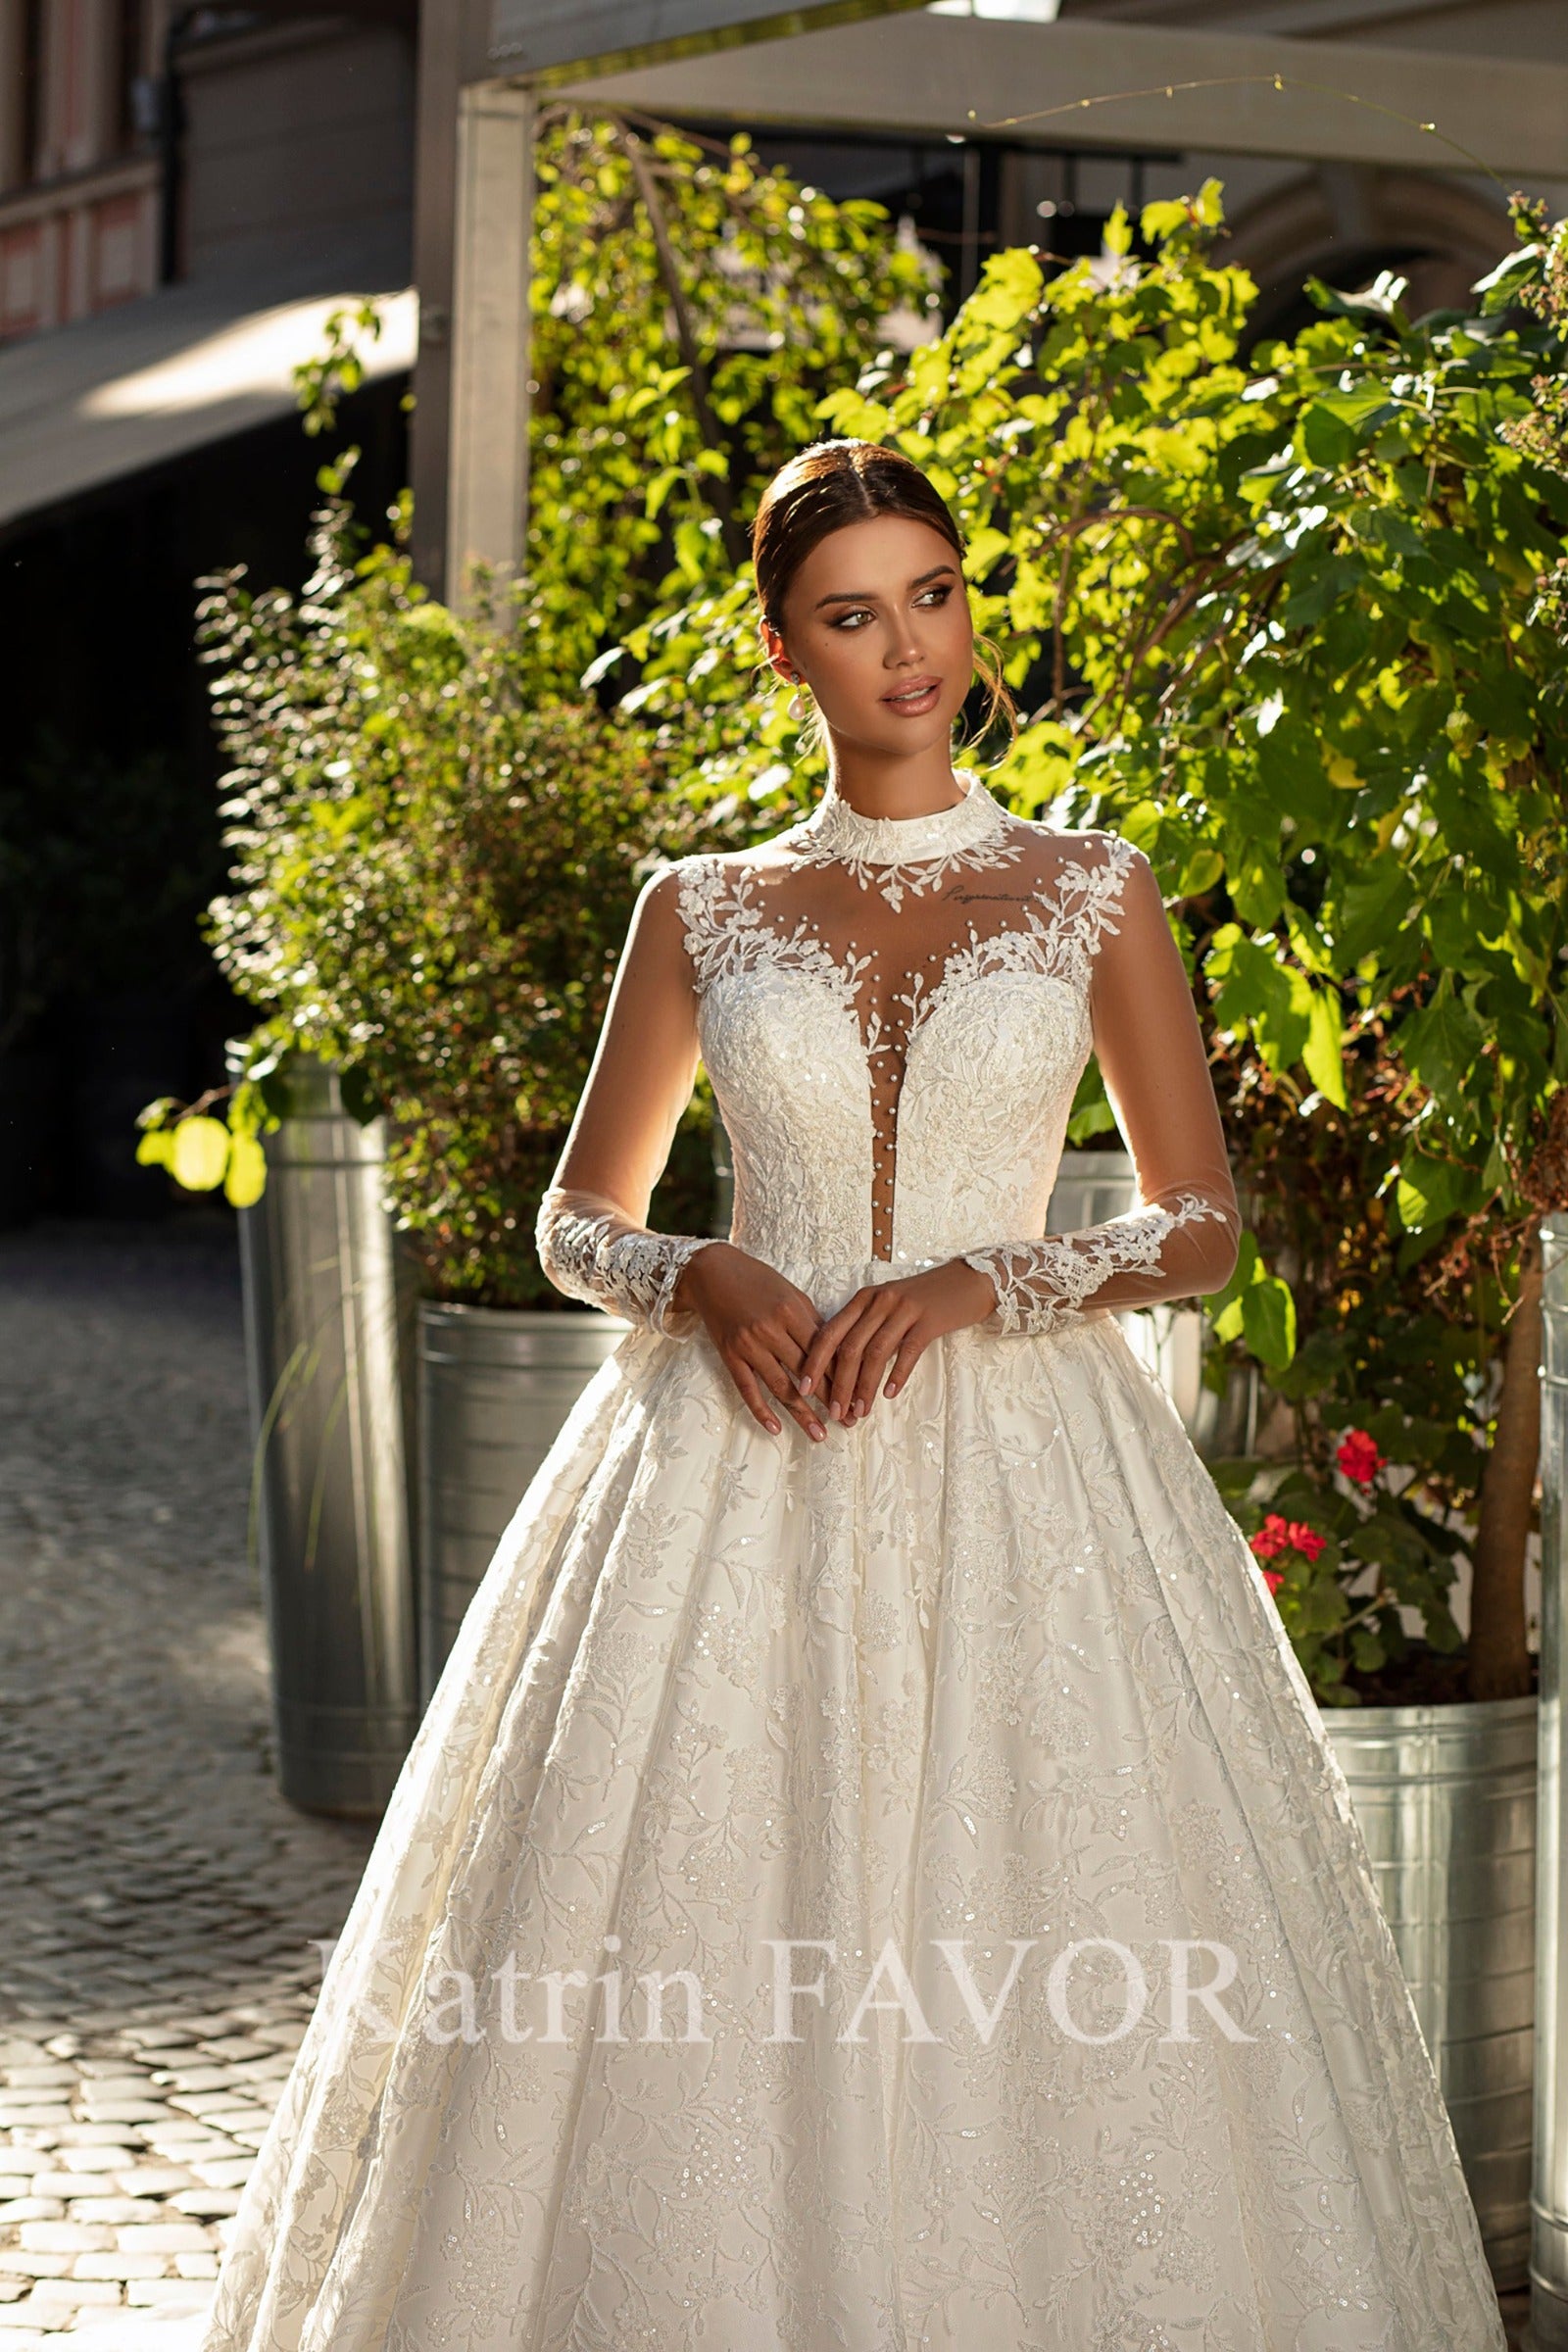 Lace ballgown princess wedding dress